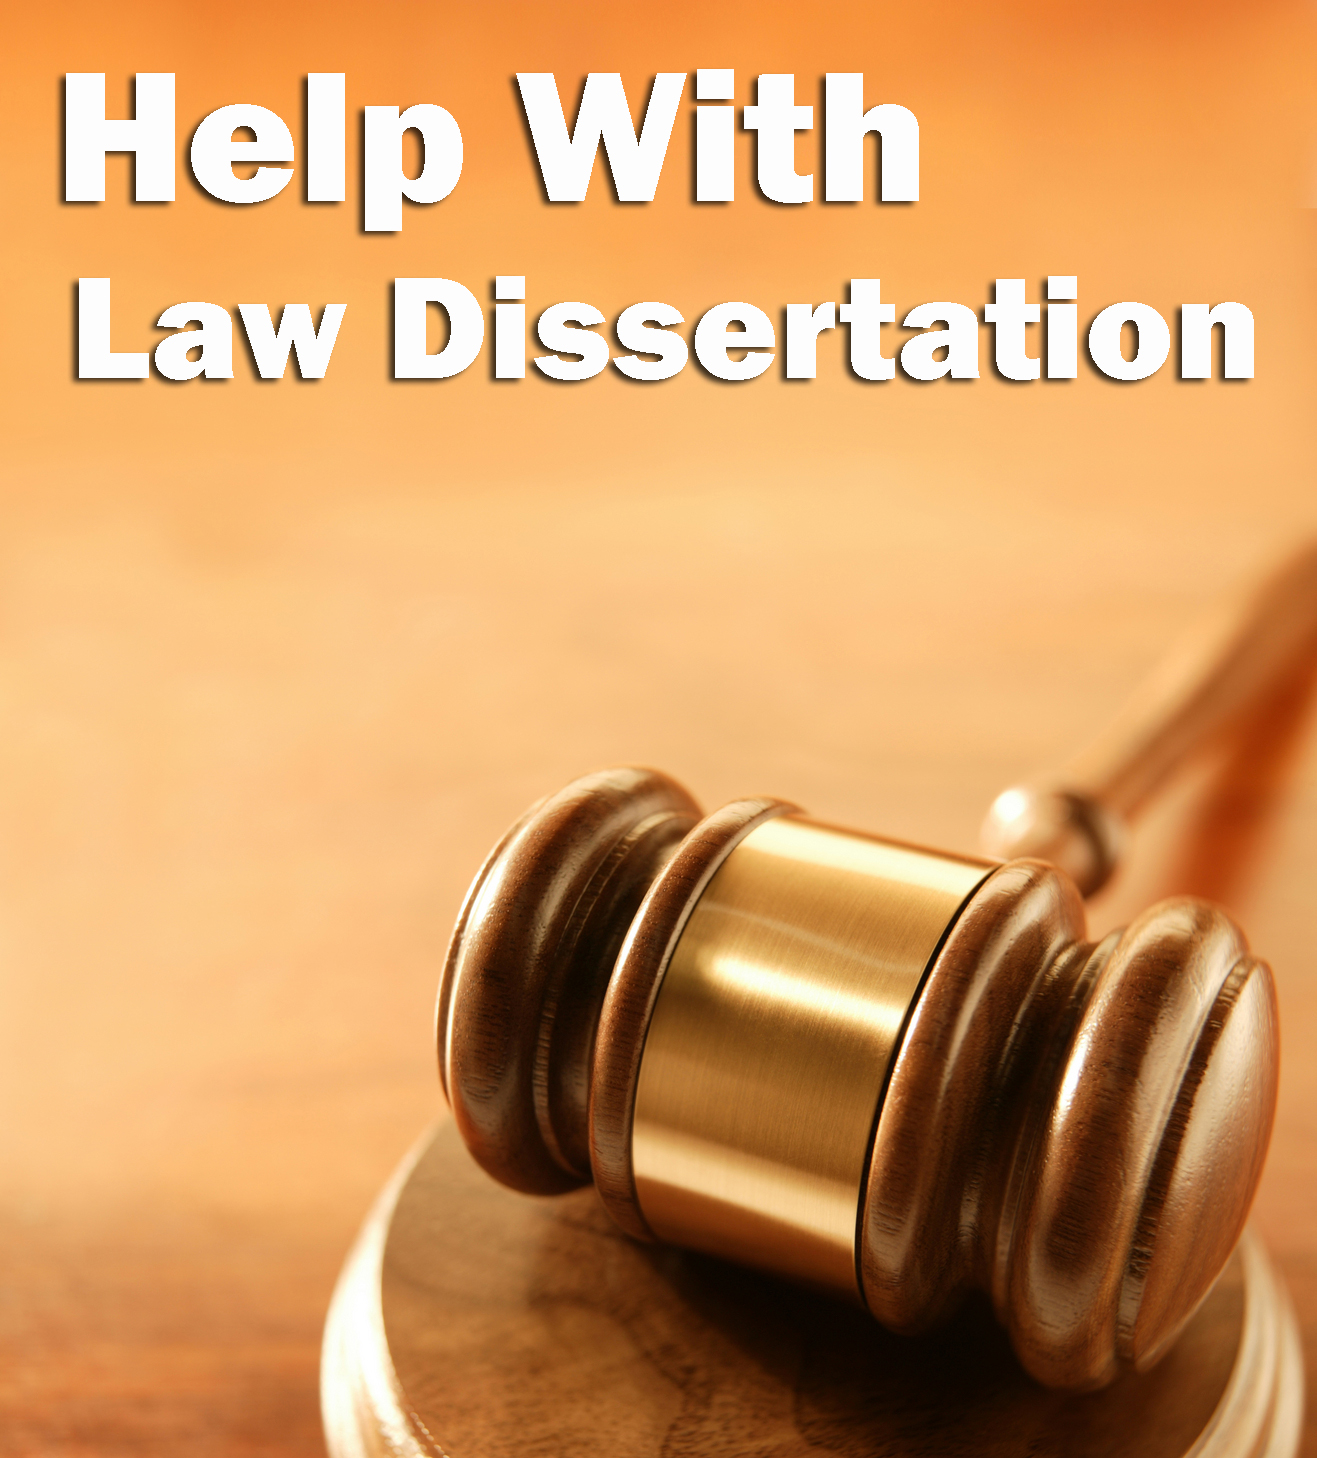 Best law dissertations